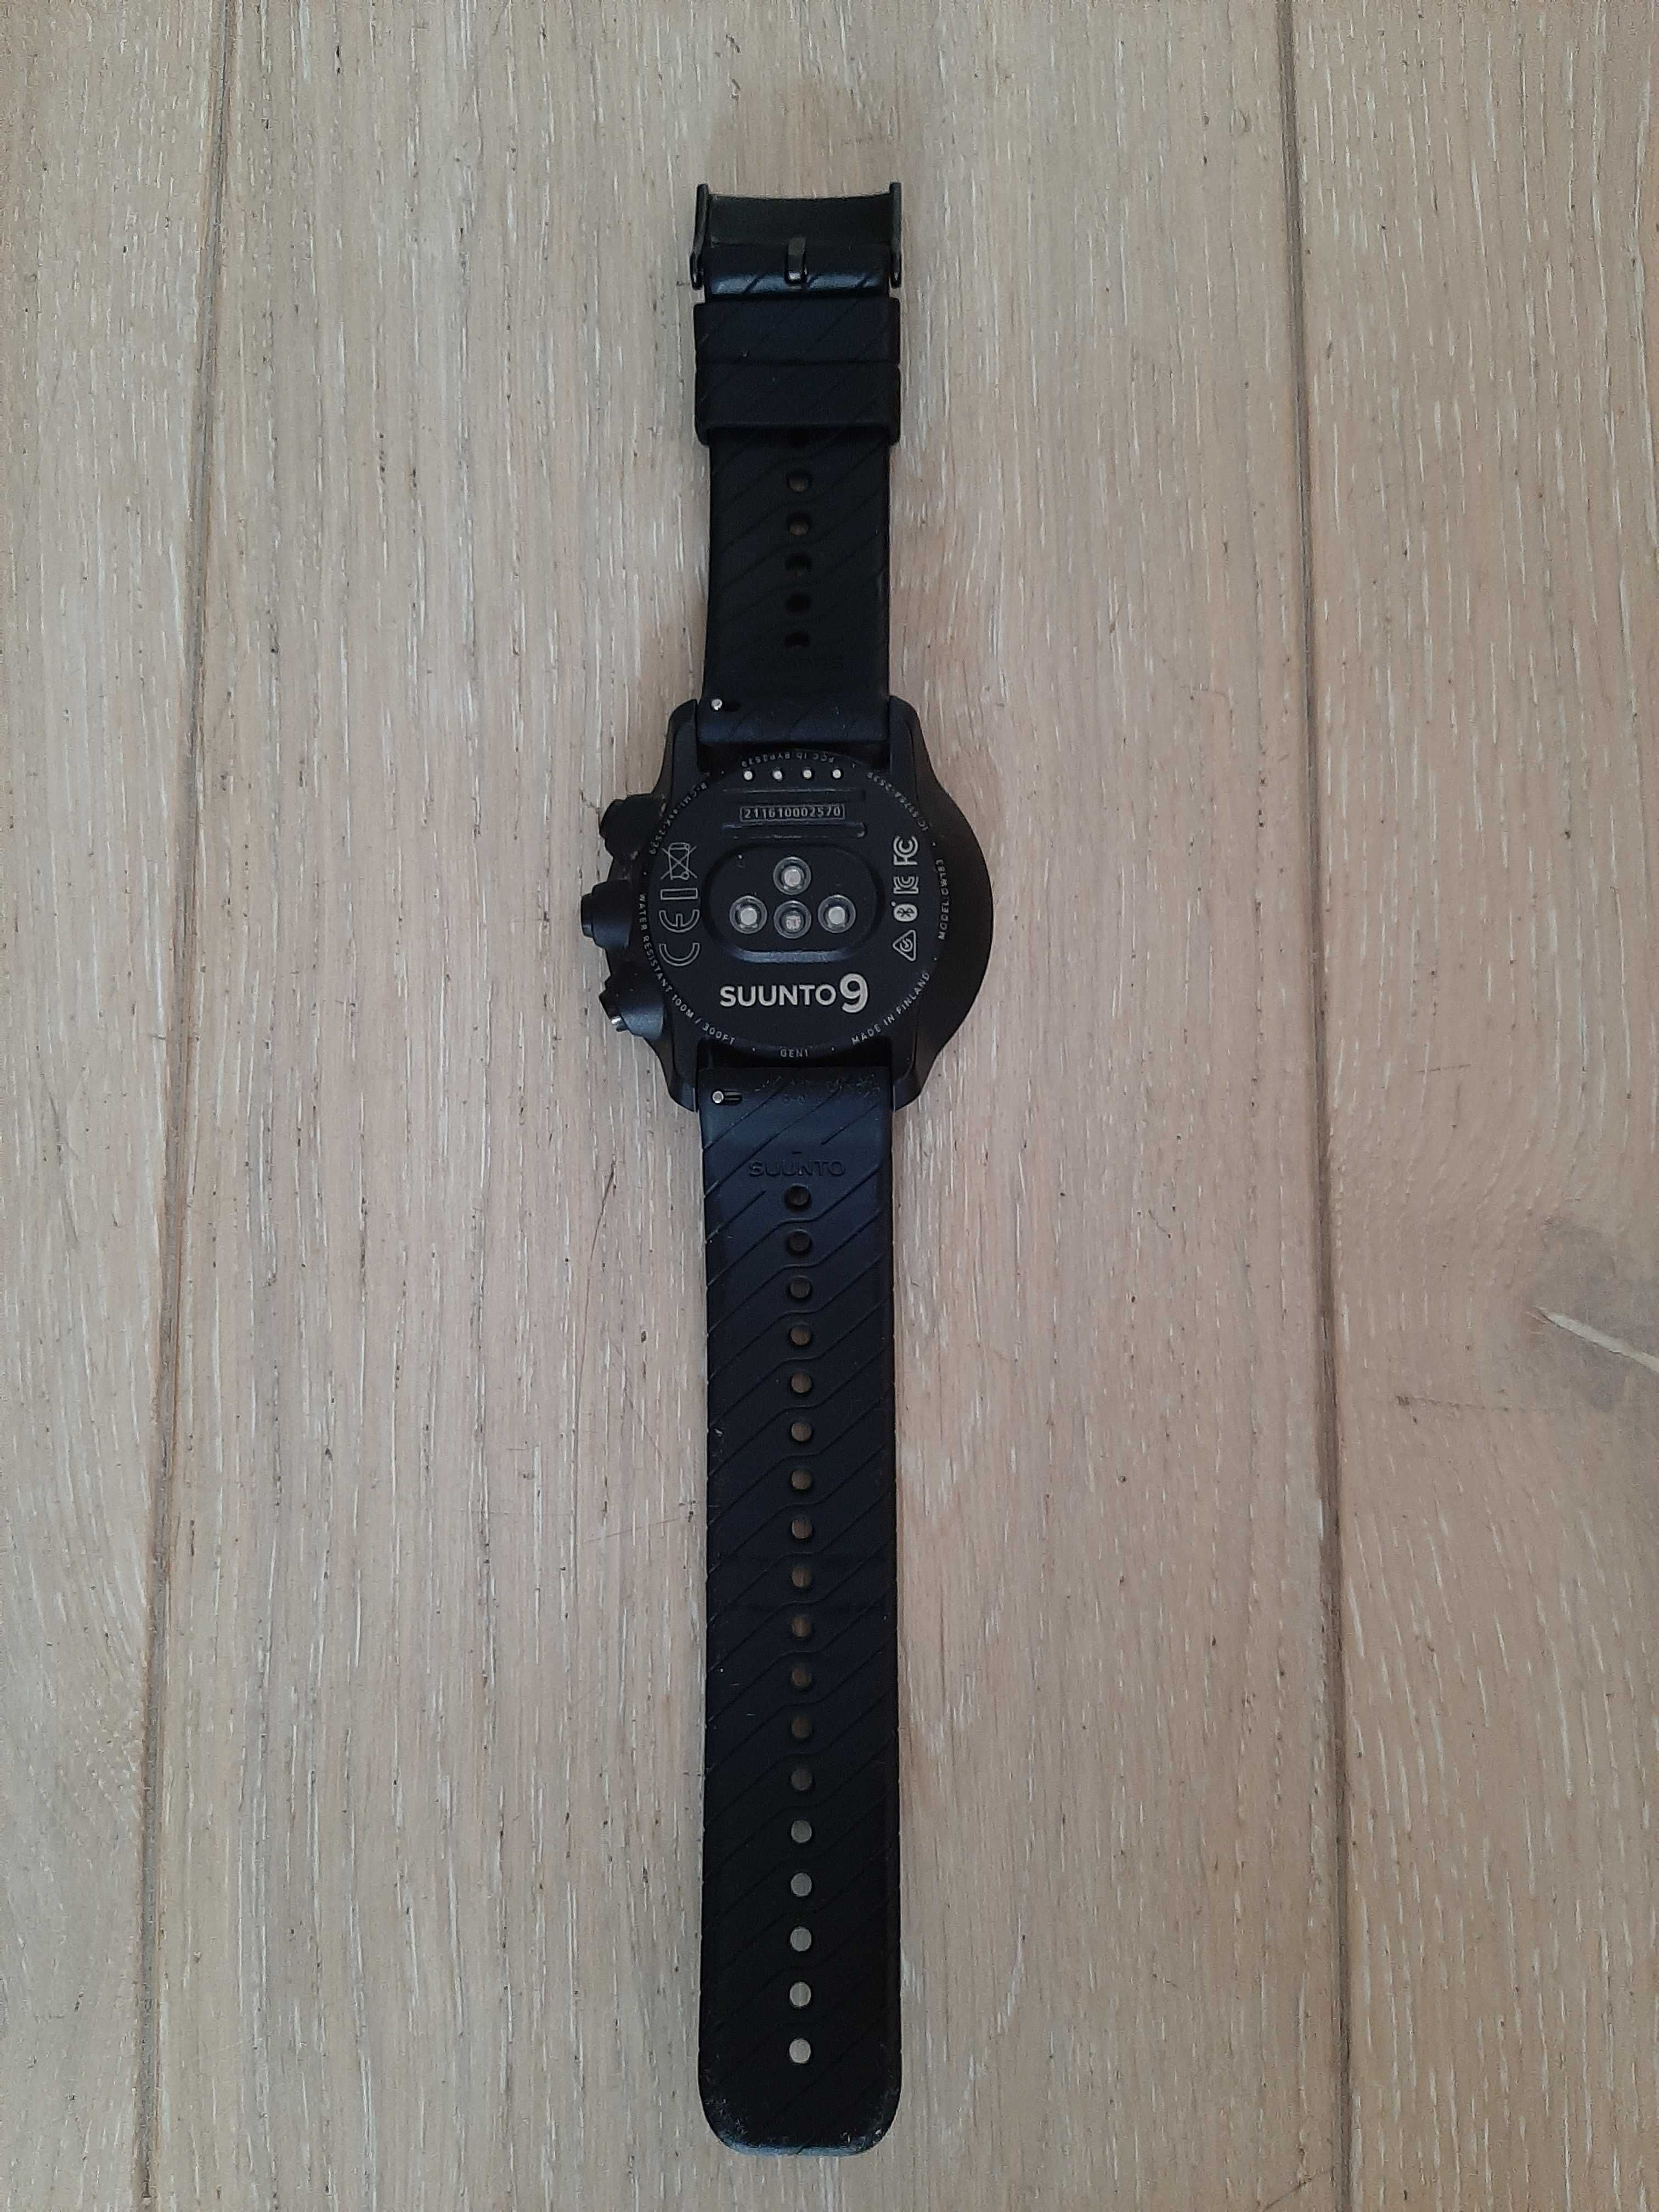 Zegarek multisportowy suunto 9 all black wrist